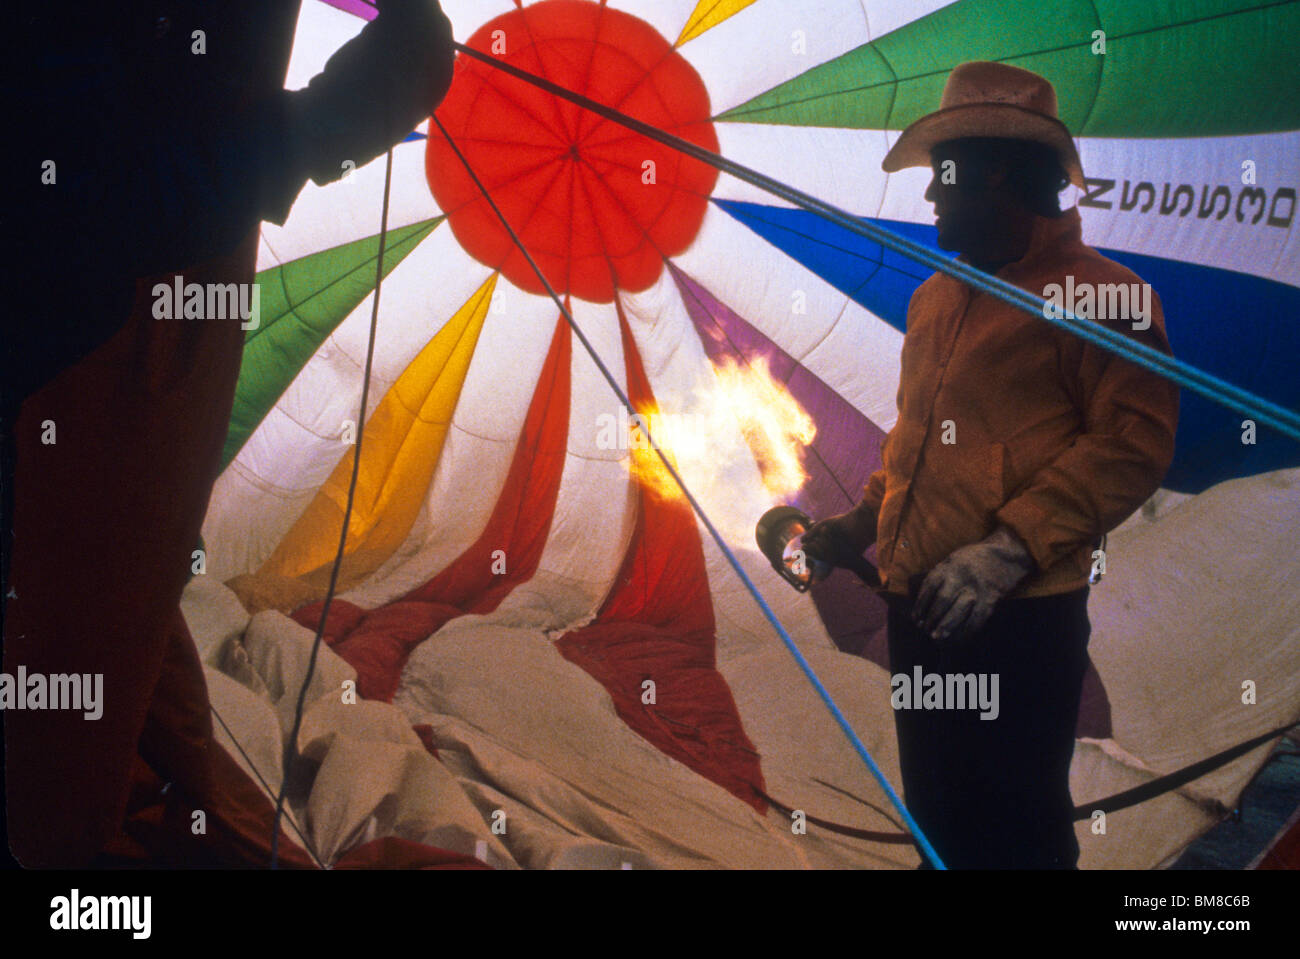 Mann halten große Propan Brenner beginnen aufblasen Heißluftballon Feuer Flamme Physik Spaß Erholung fliegen Aufzug Himmelsfarbe Stockfoto